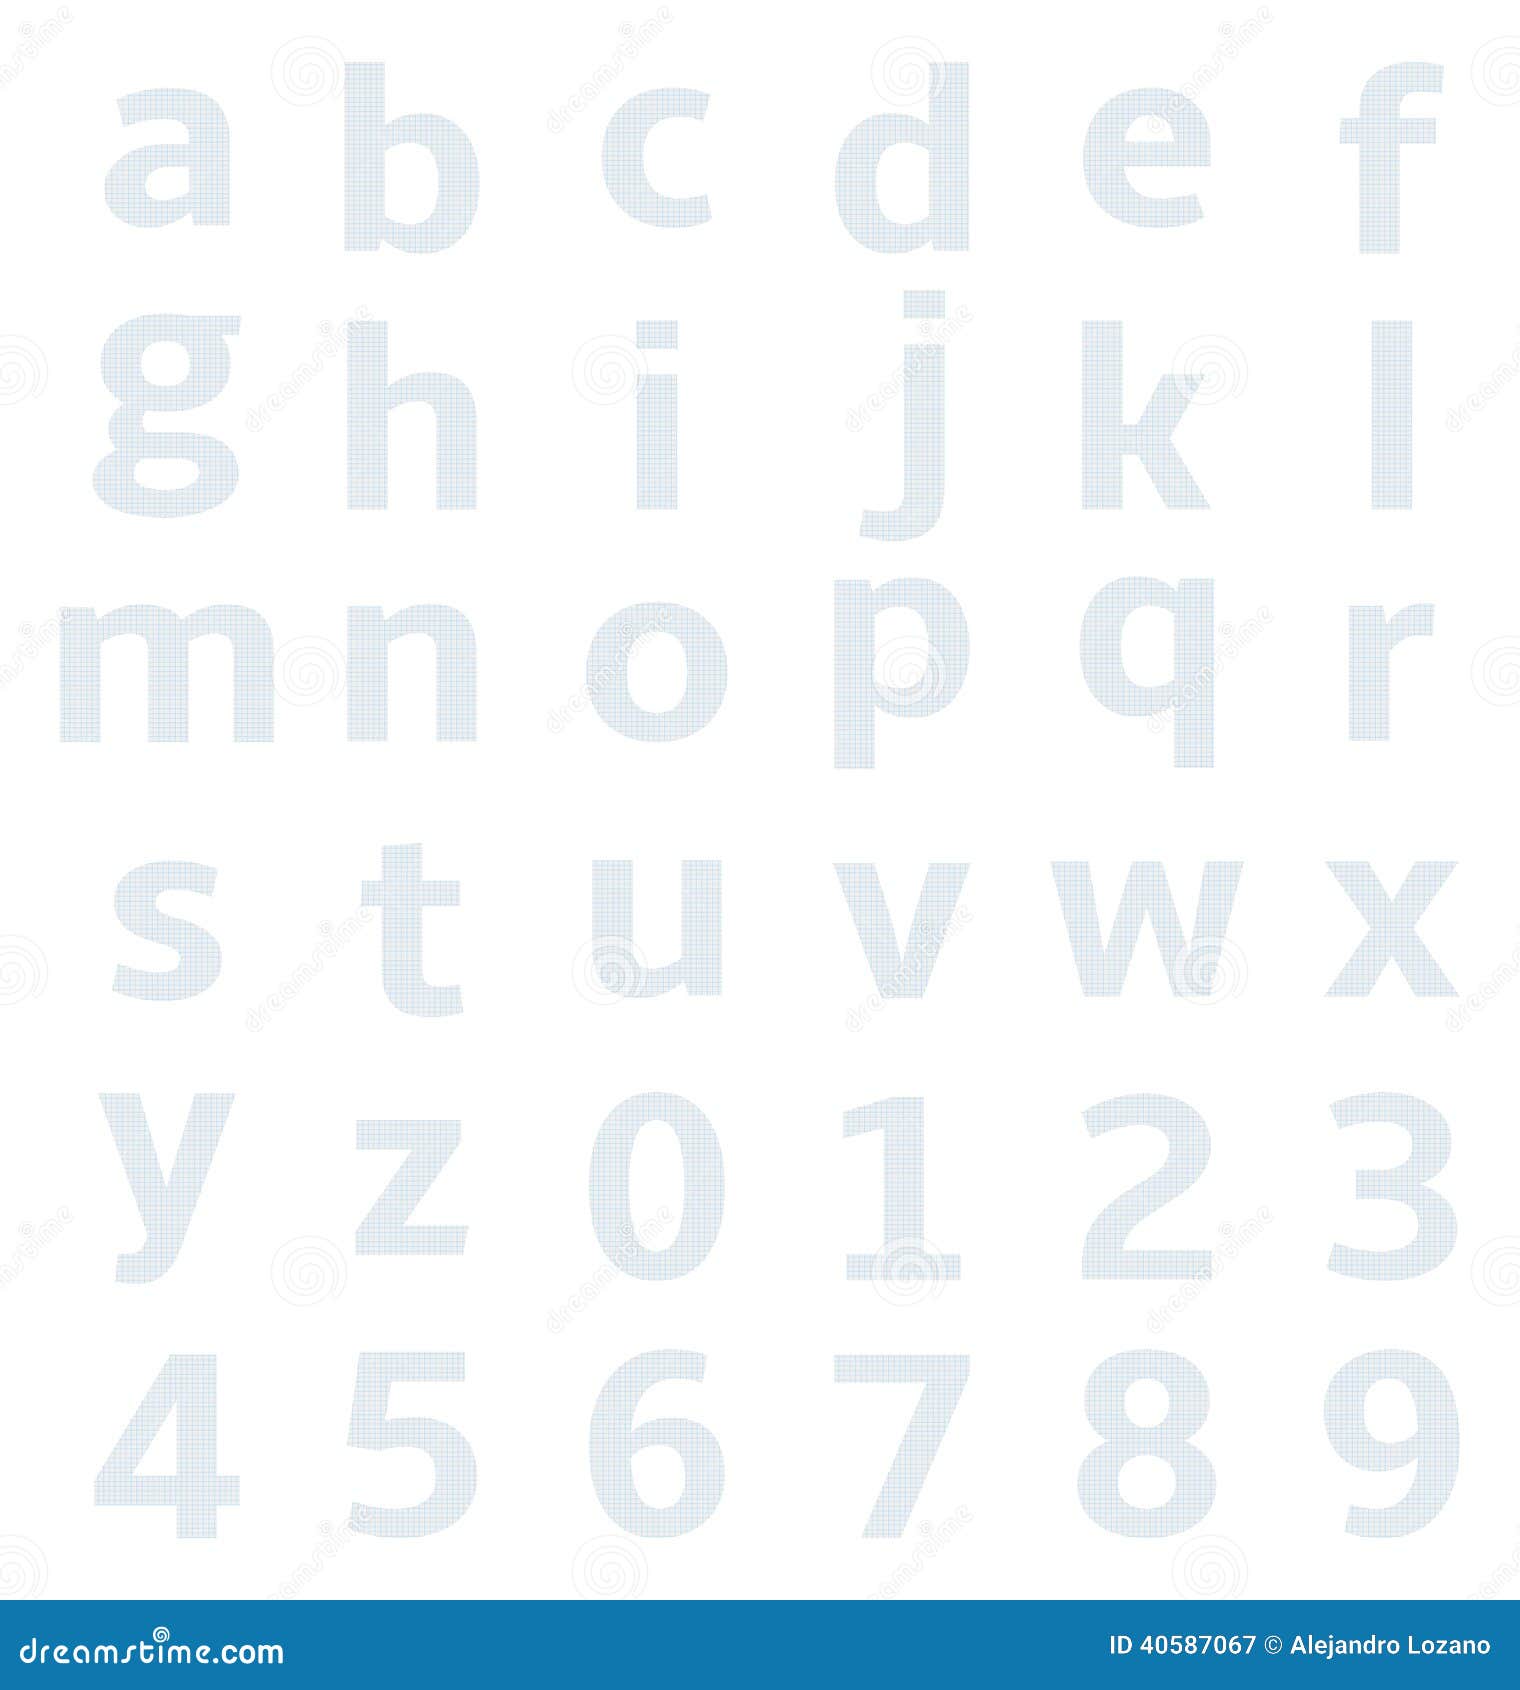 lowercase alphabet graph paper stock vector illustration